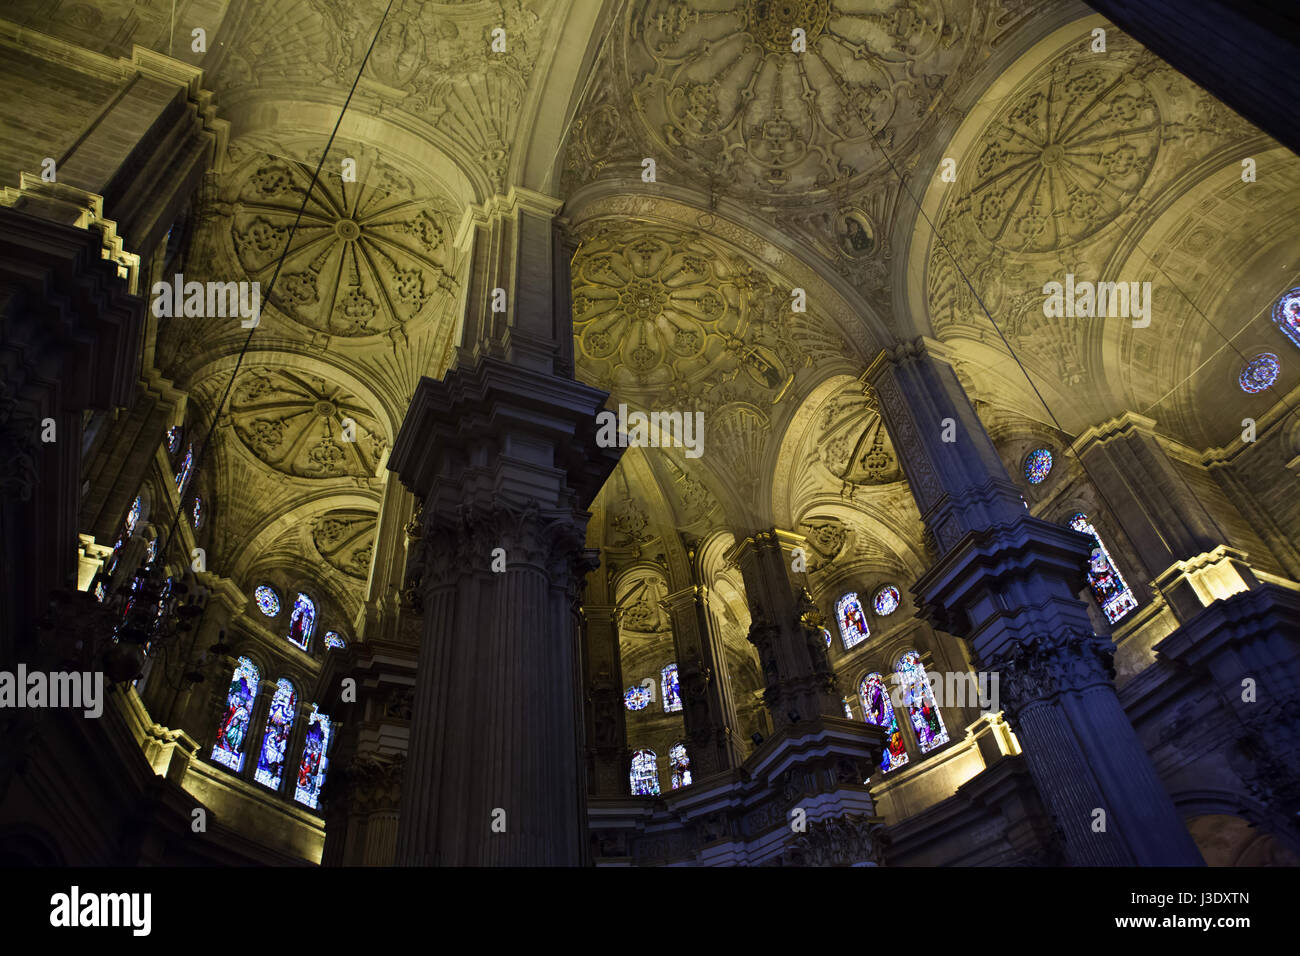 Interior of the Malaga Cathedral (Catedral de Malaga) in Malaga, Andalusia, Spain. Stock Photo